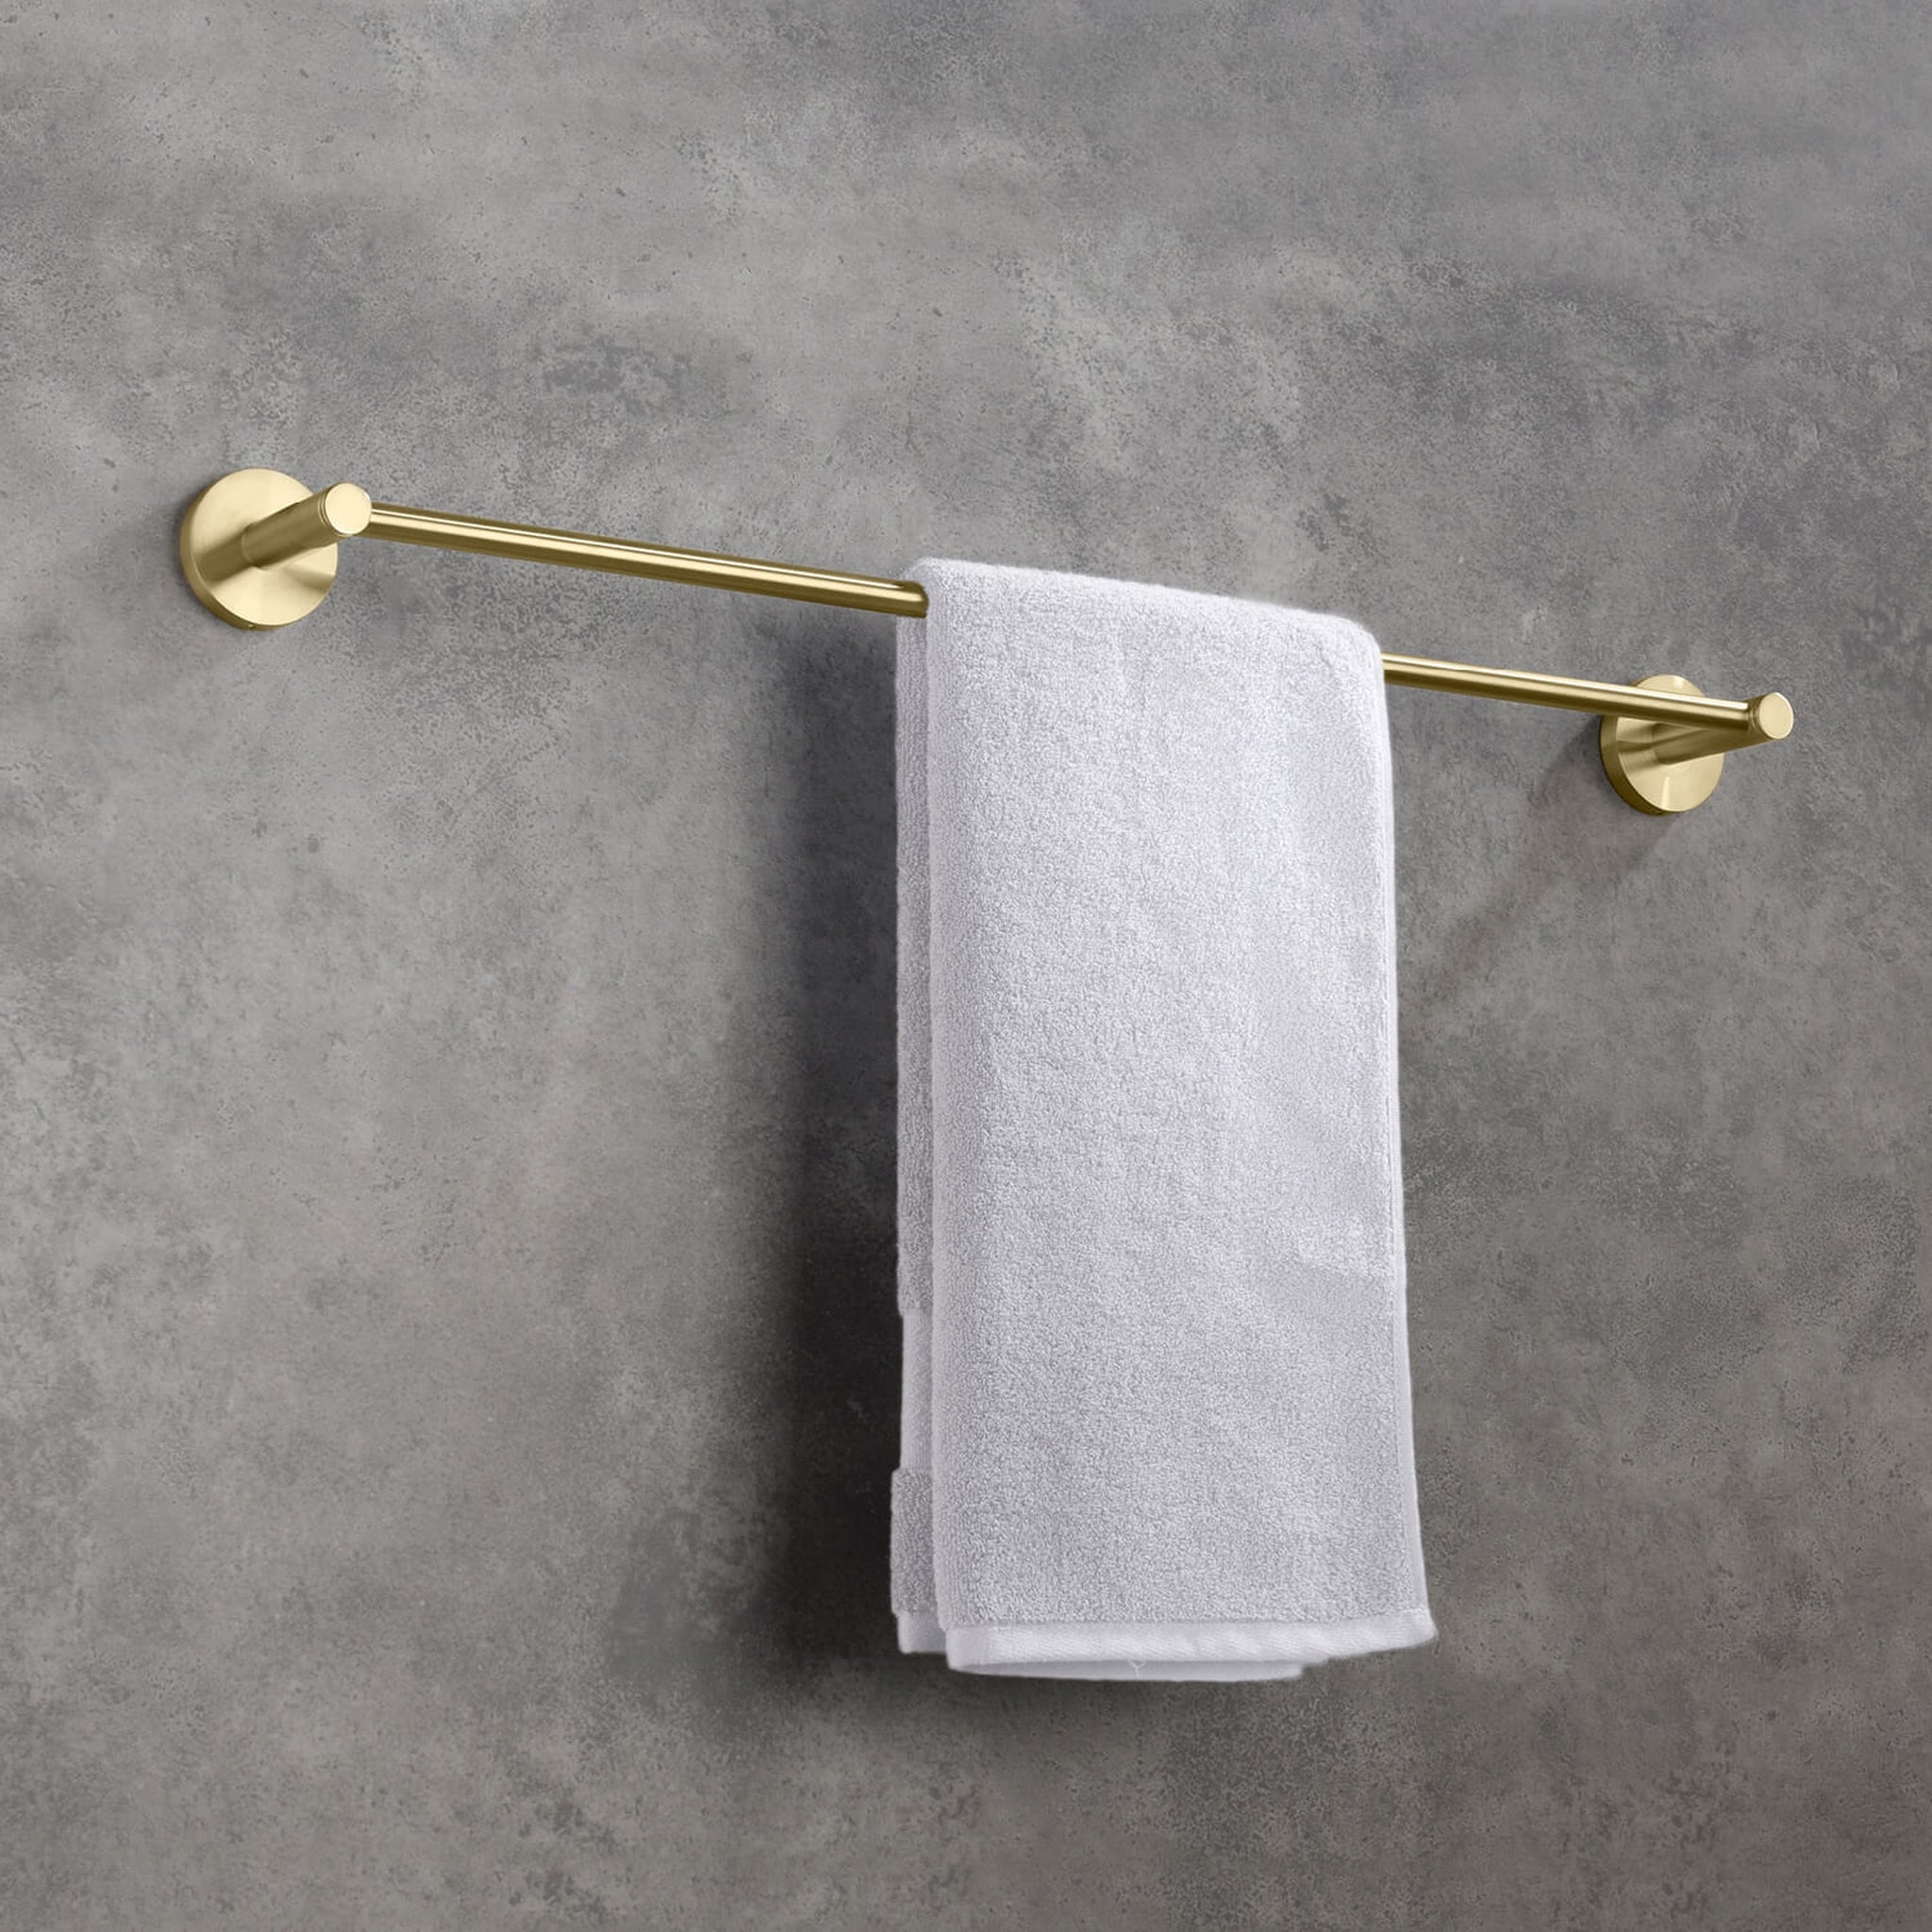 KIBI, KIBI Circular 24" Brass Bathroom Towel Bar in Brushed Gold Finish